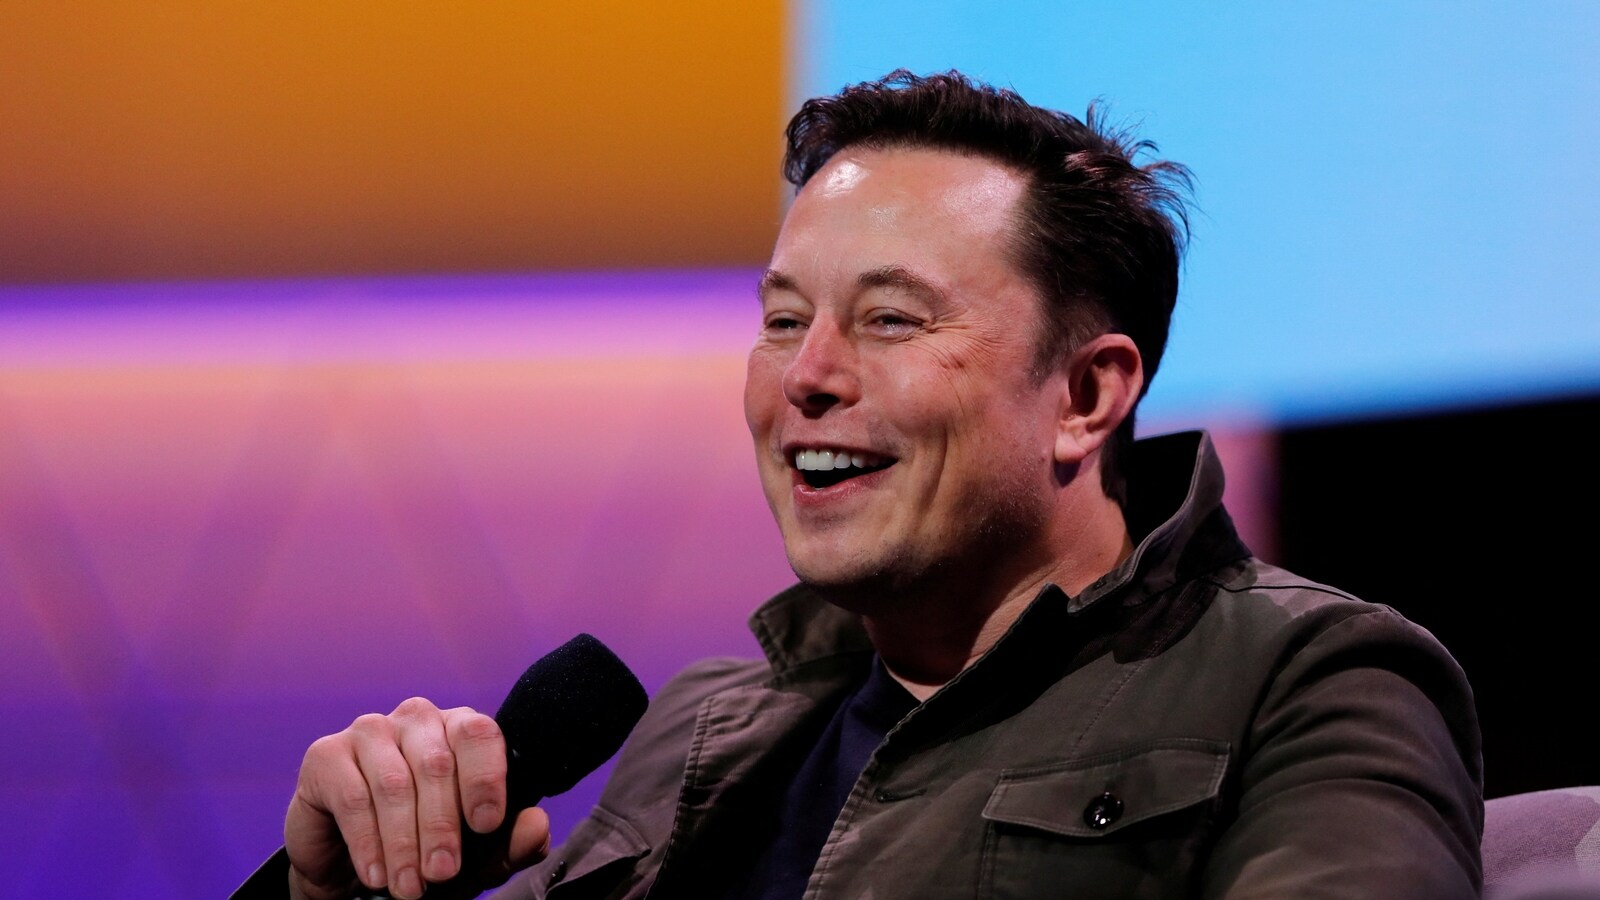 Elon Musk says he has $46.5B in financing ready to buy Twitter